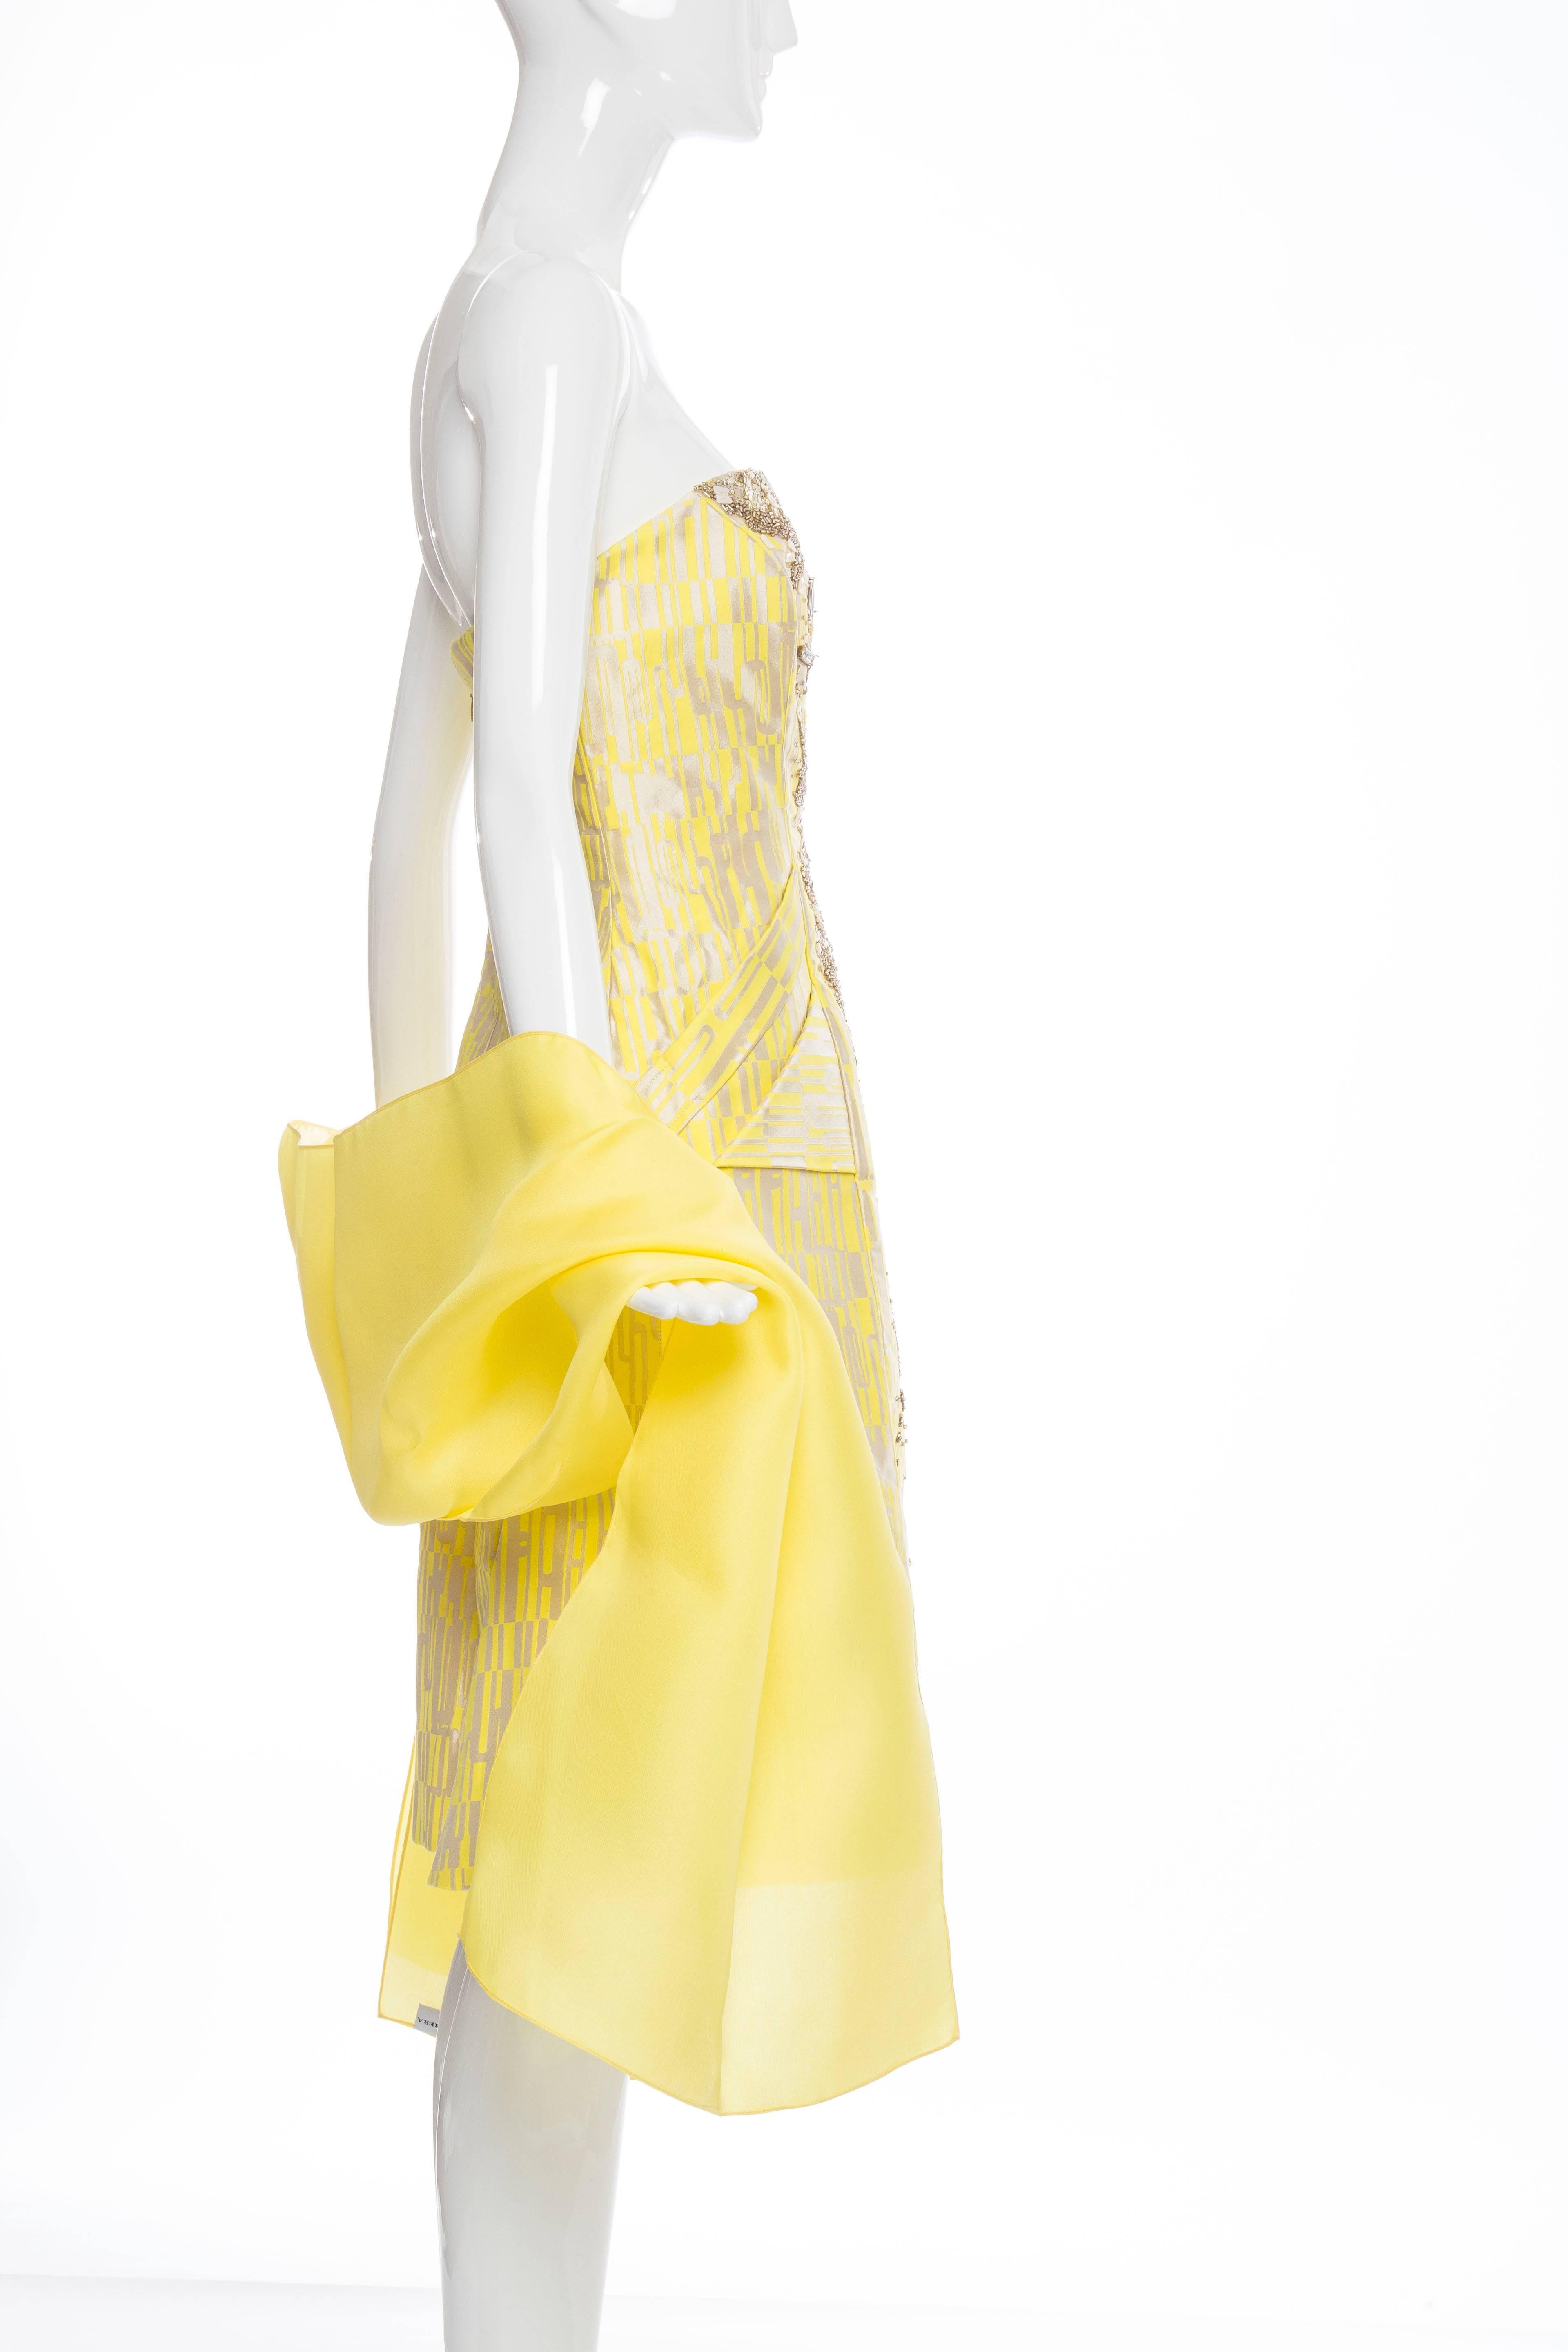 Orange Carolina Herrera Strapless Dress Spring 2012 For Sale